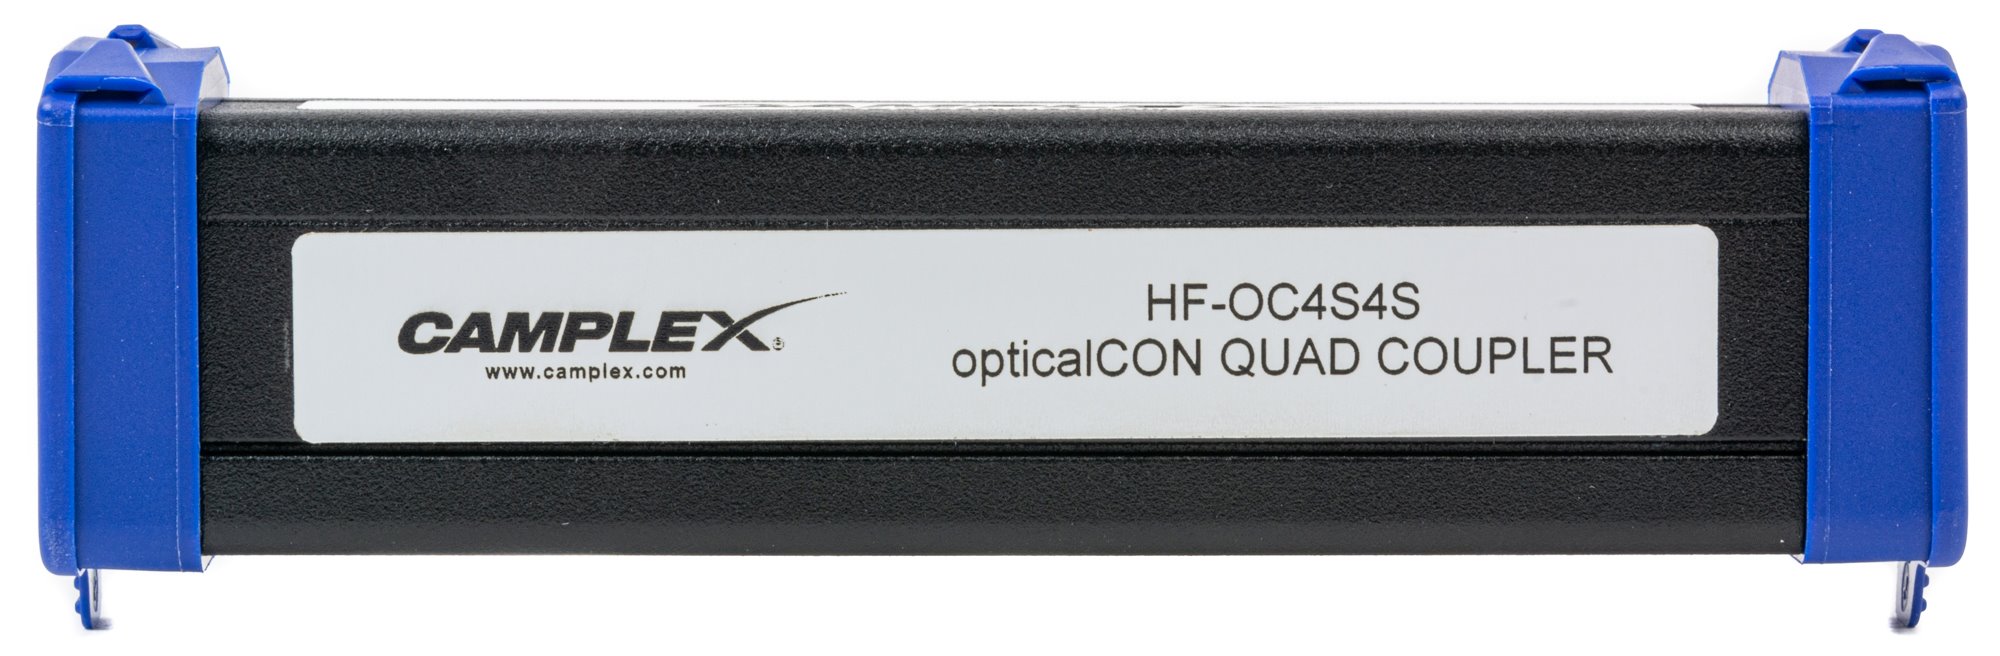 HF-OC2S2S Coupler - opticalCON DUO to DUO